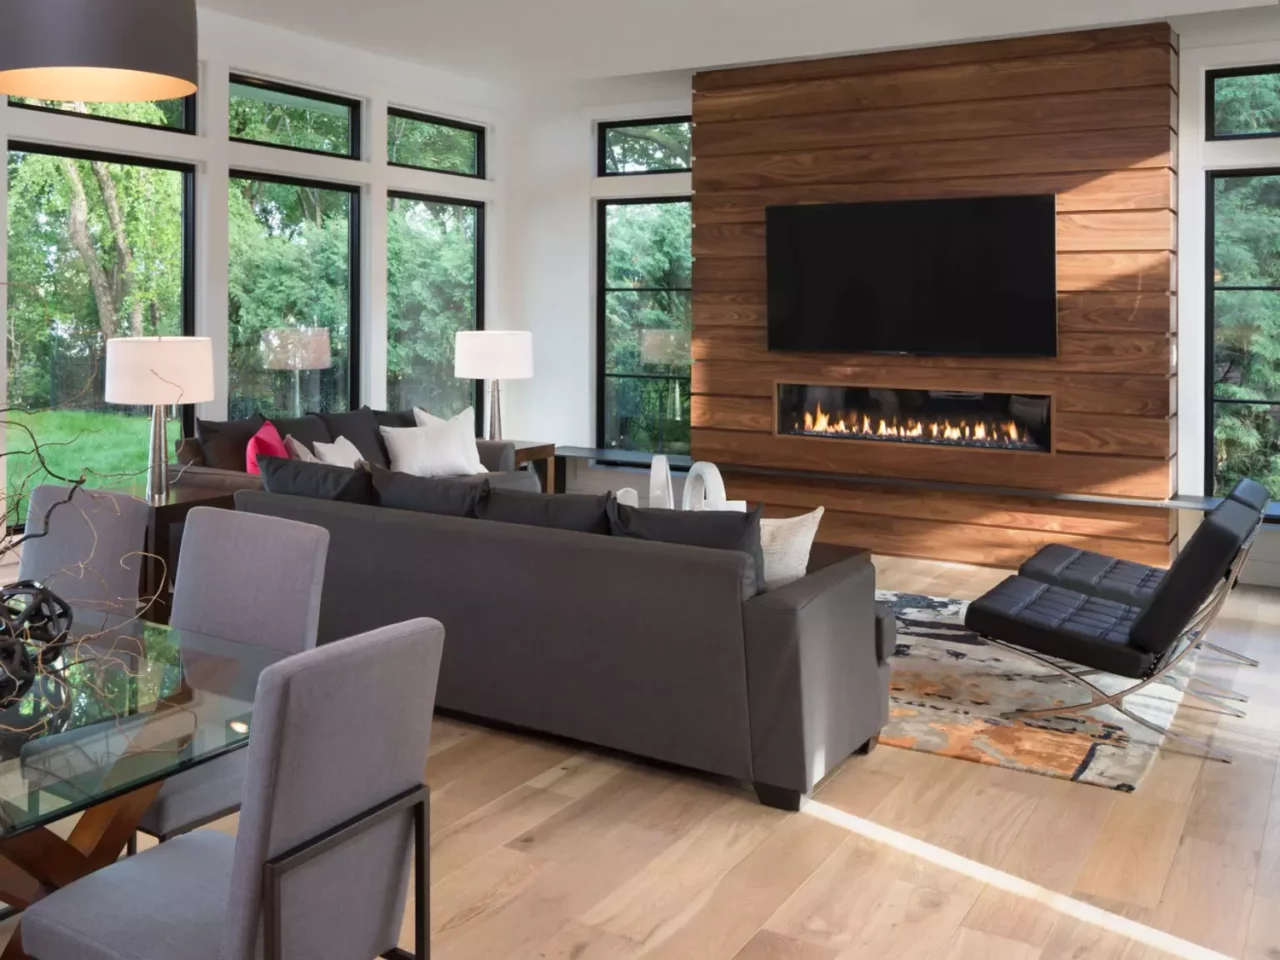 HNG_Primo_wood_fireplace_livingroom-wTV-2x-jpg